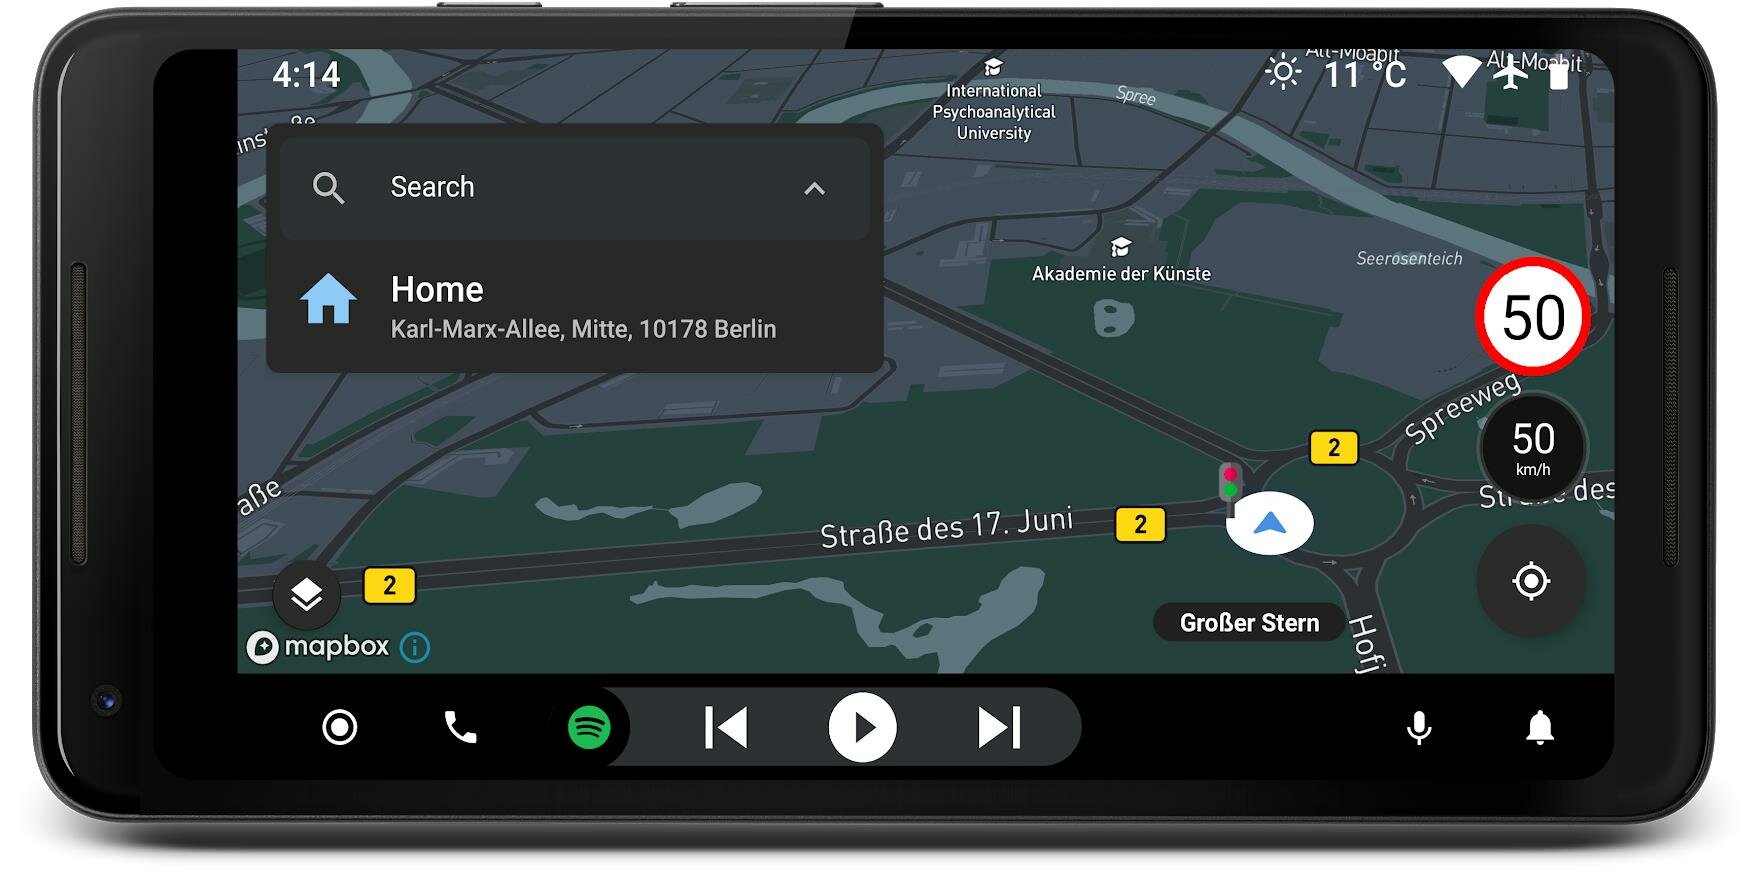 Видео приложения андроид авто. Car Launcher с навигацией. Кар лаунчер с навигатором. Android auto. Android auto screenshot.